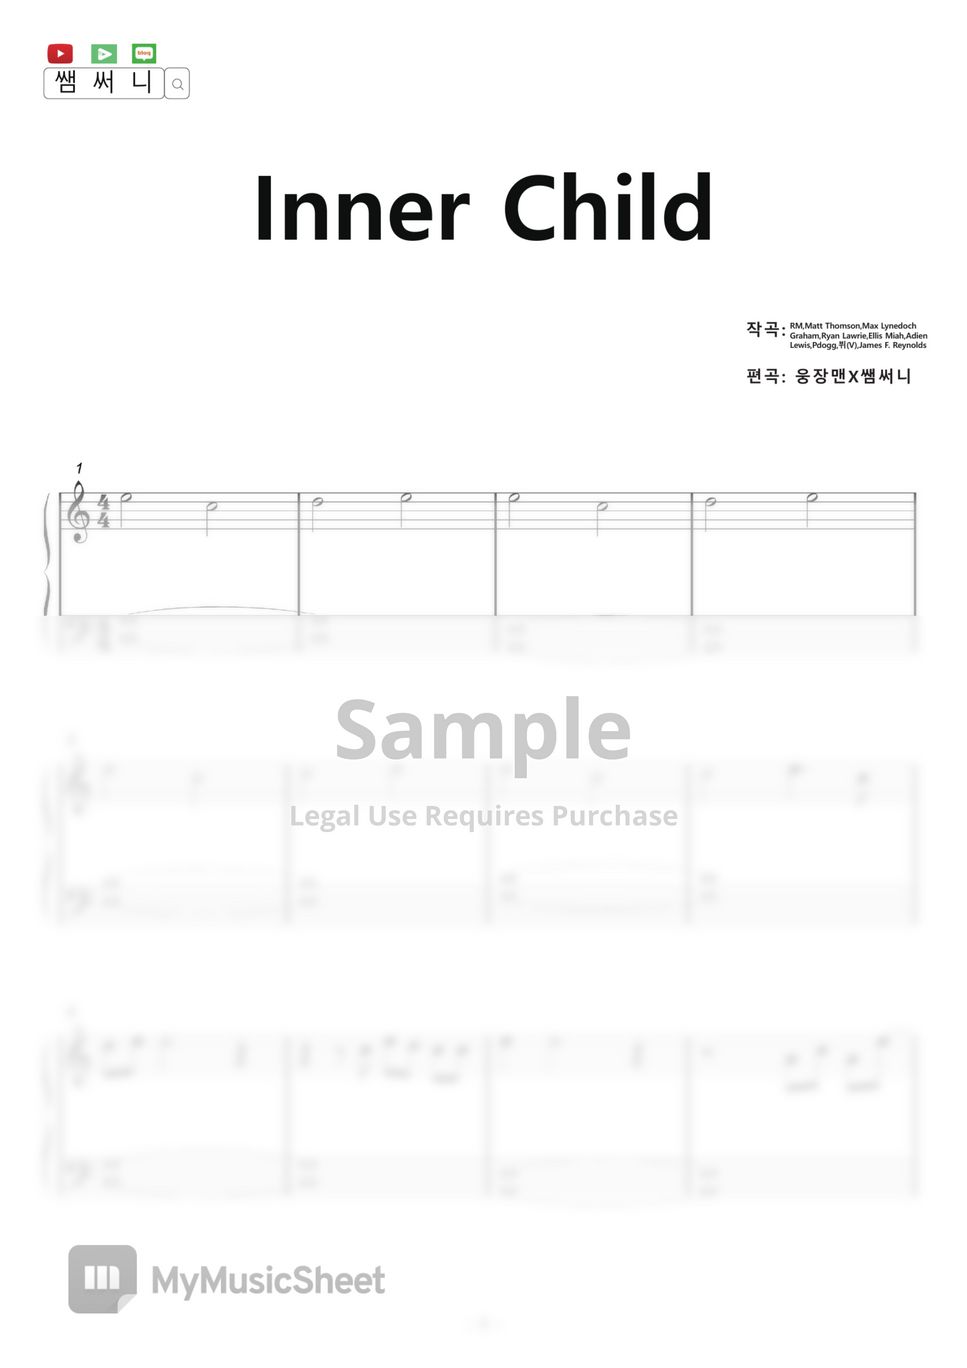 BTS - Inner Child by samsunny